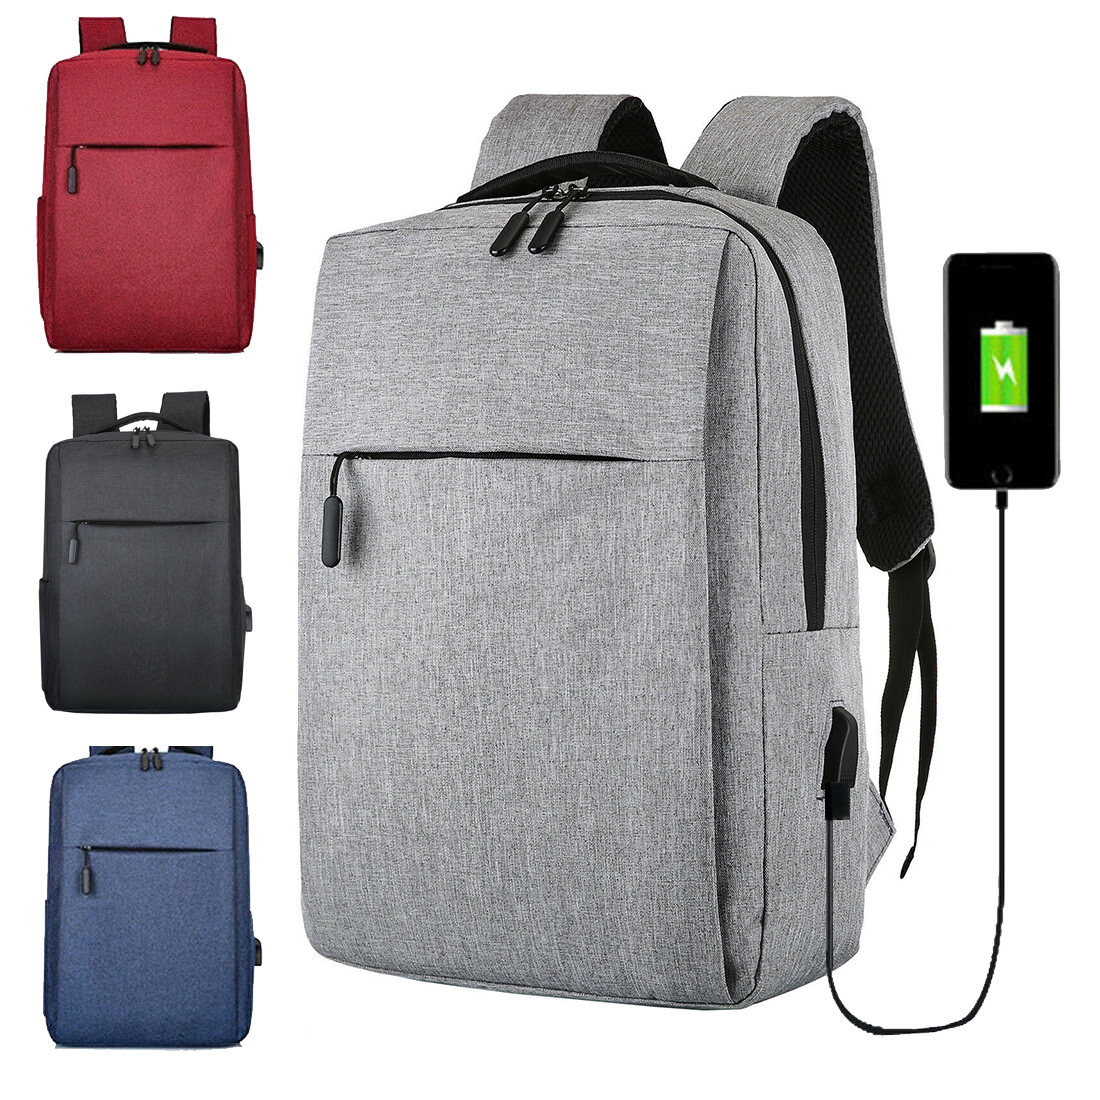 Novaa Bags 16" Slim Casual Waterproof Laptop Backpack with USB Charging Port Gray - image 1 of 5